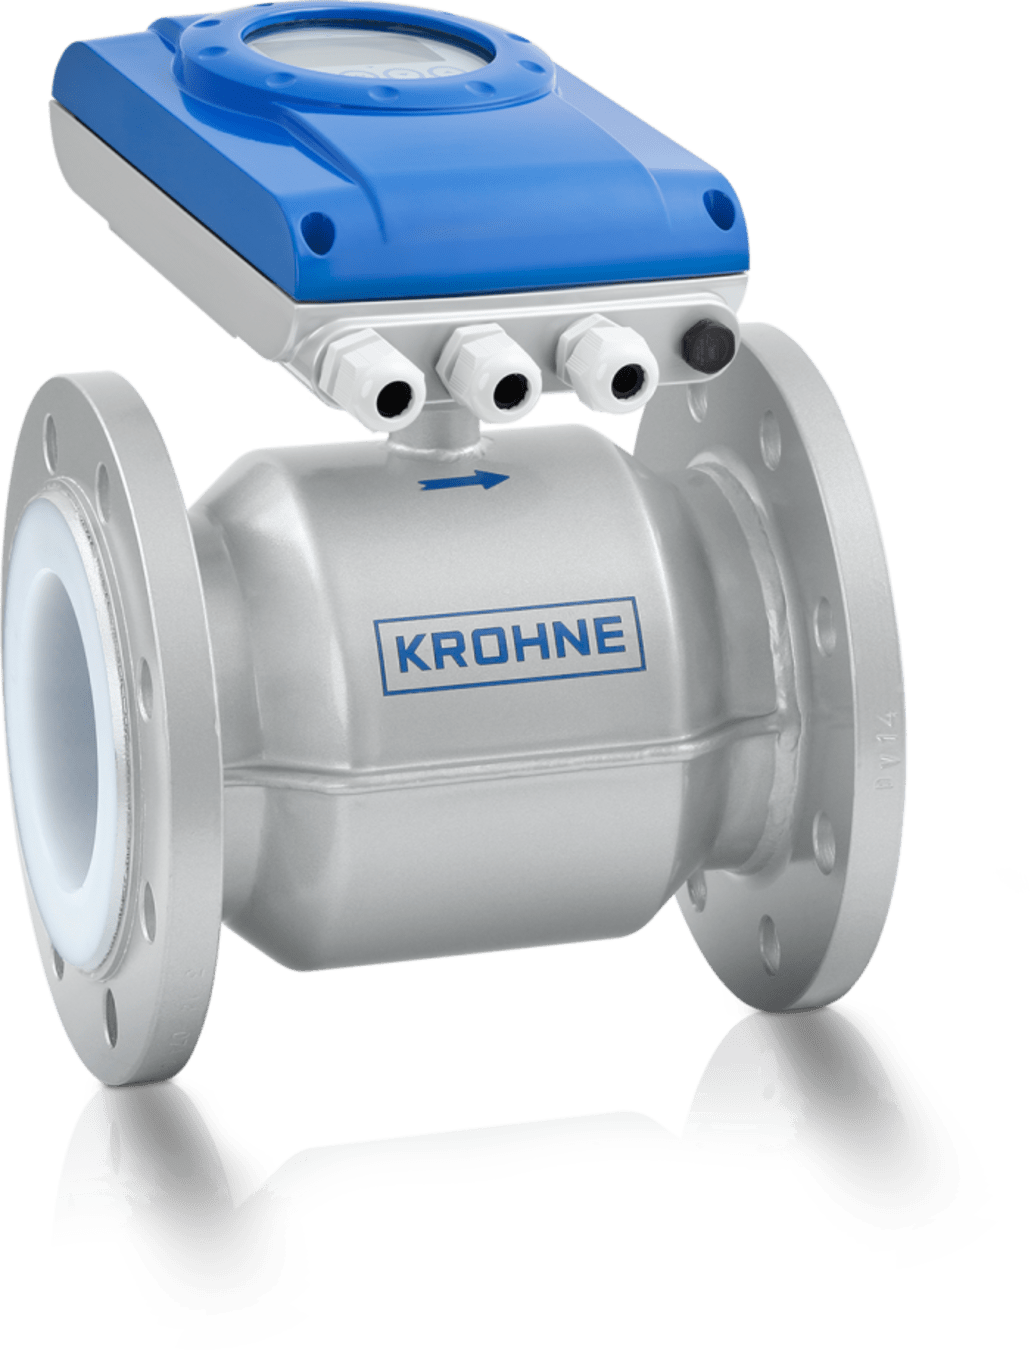 Krohne valve